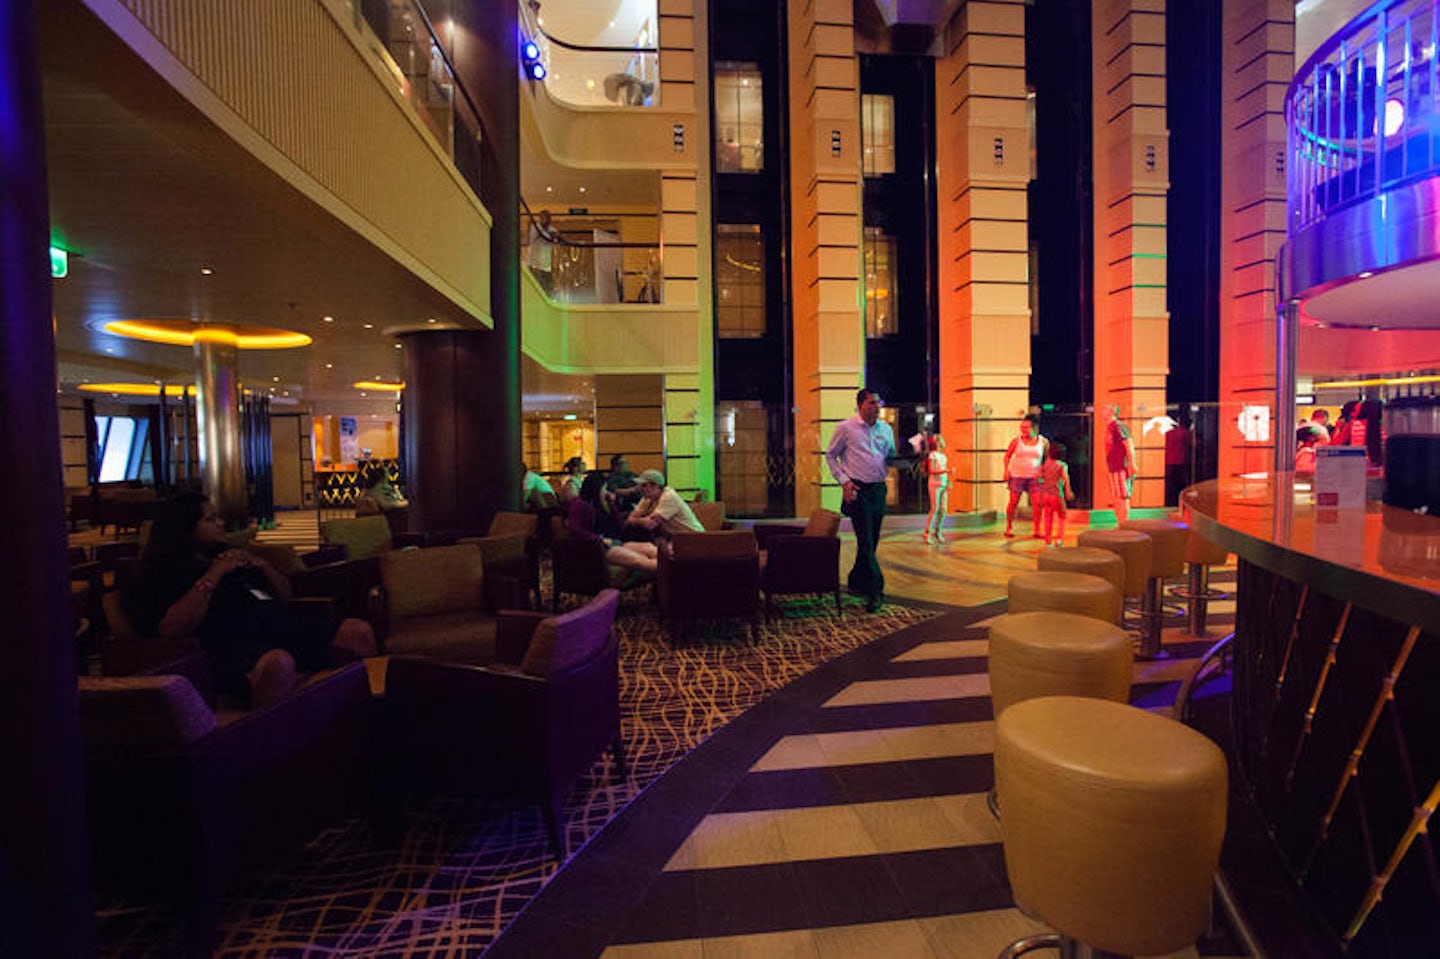 Atrium on Carnival Breeze Cruise Ship - Cruise Critic